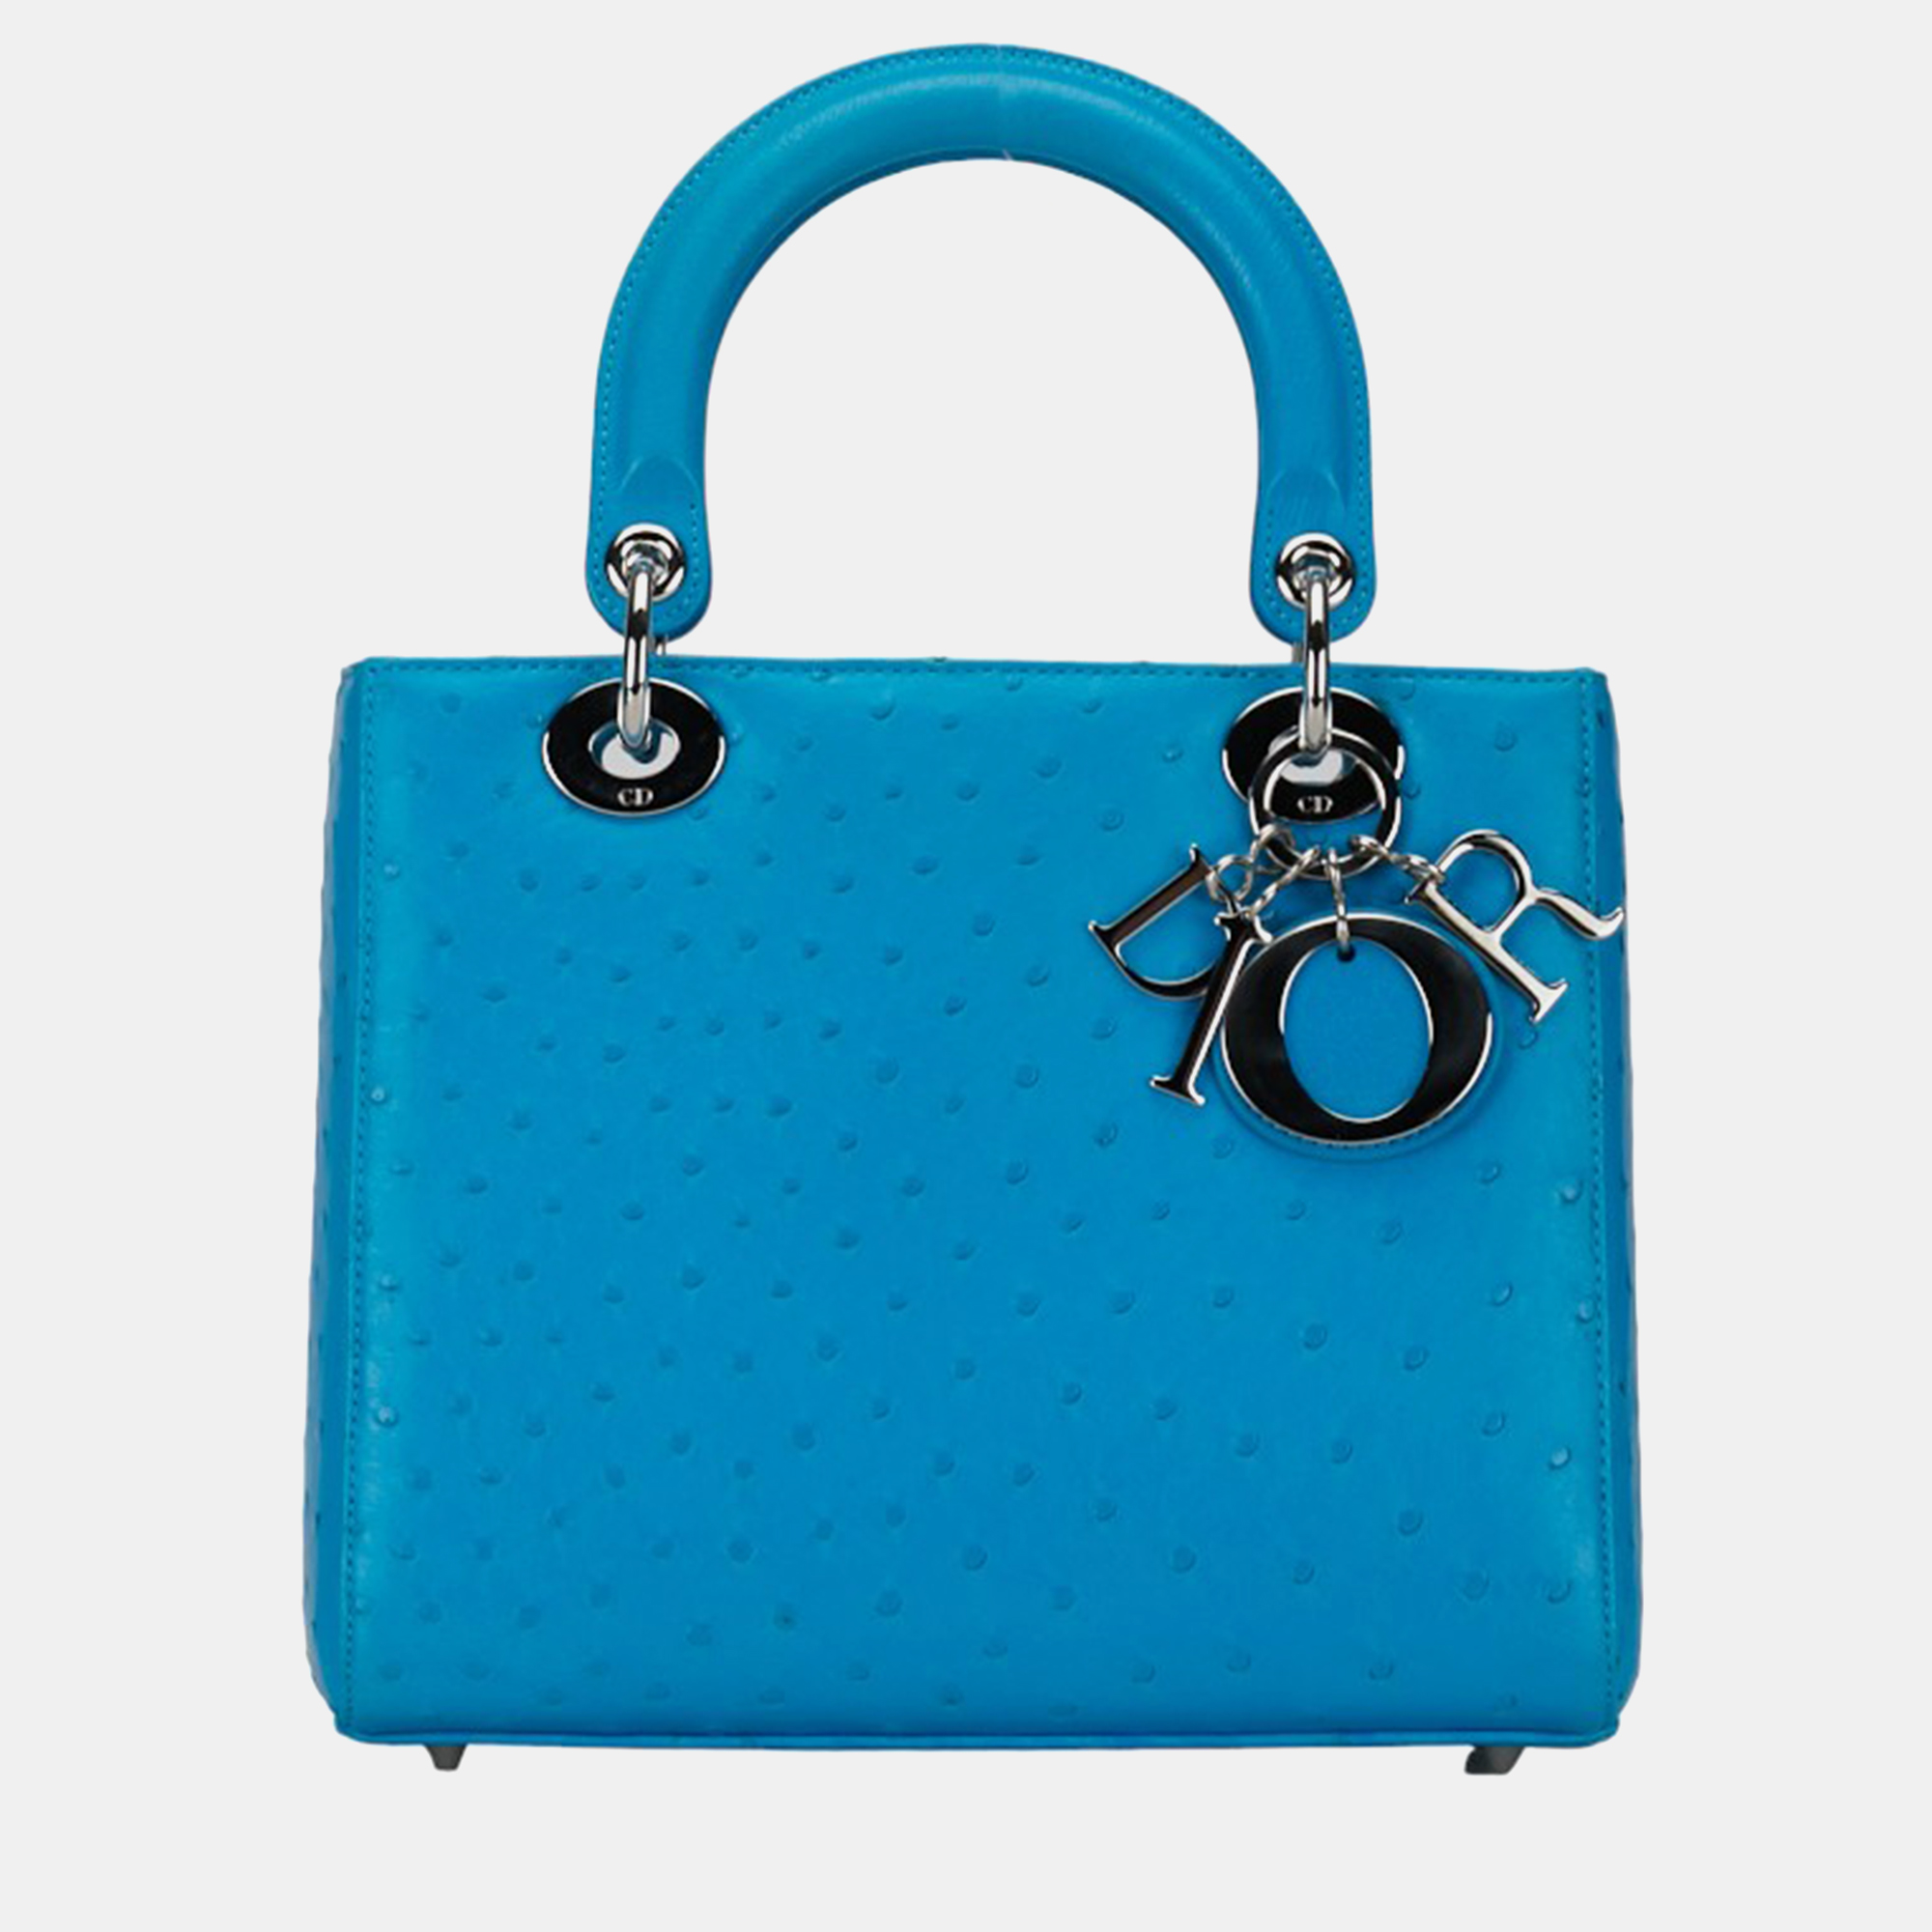 Dior blue leather medium leather lady dior top handle bag